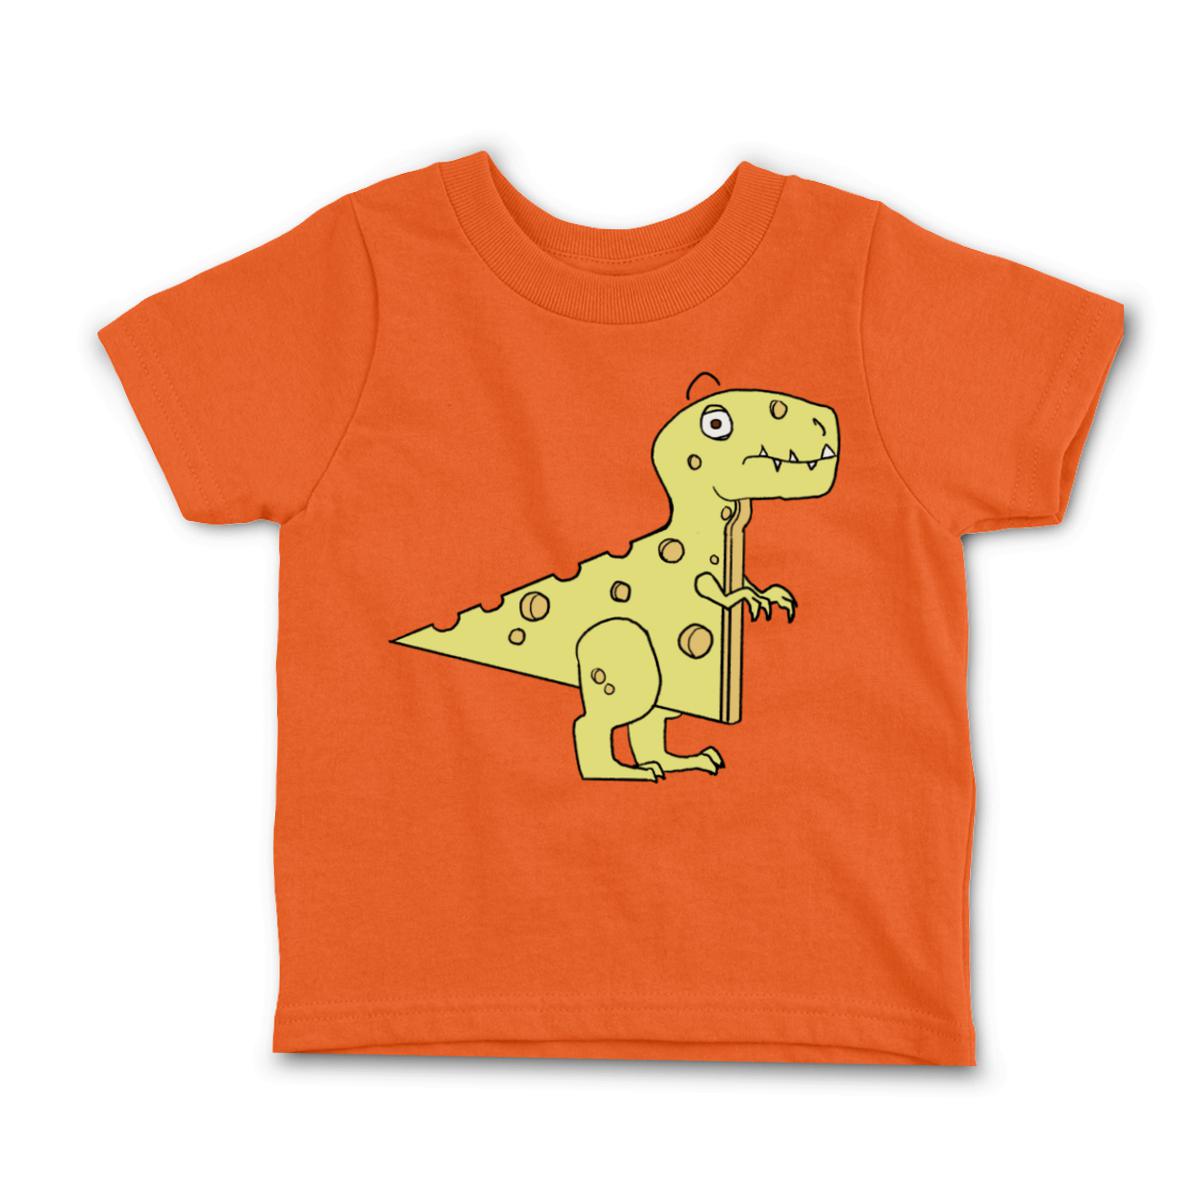 Cheeseosaurus Rex Infant Tee 24M orange